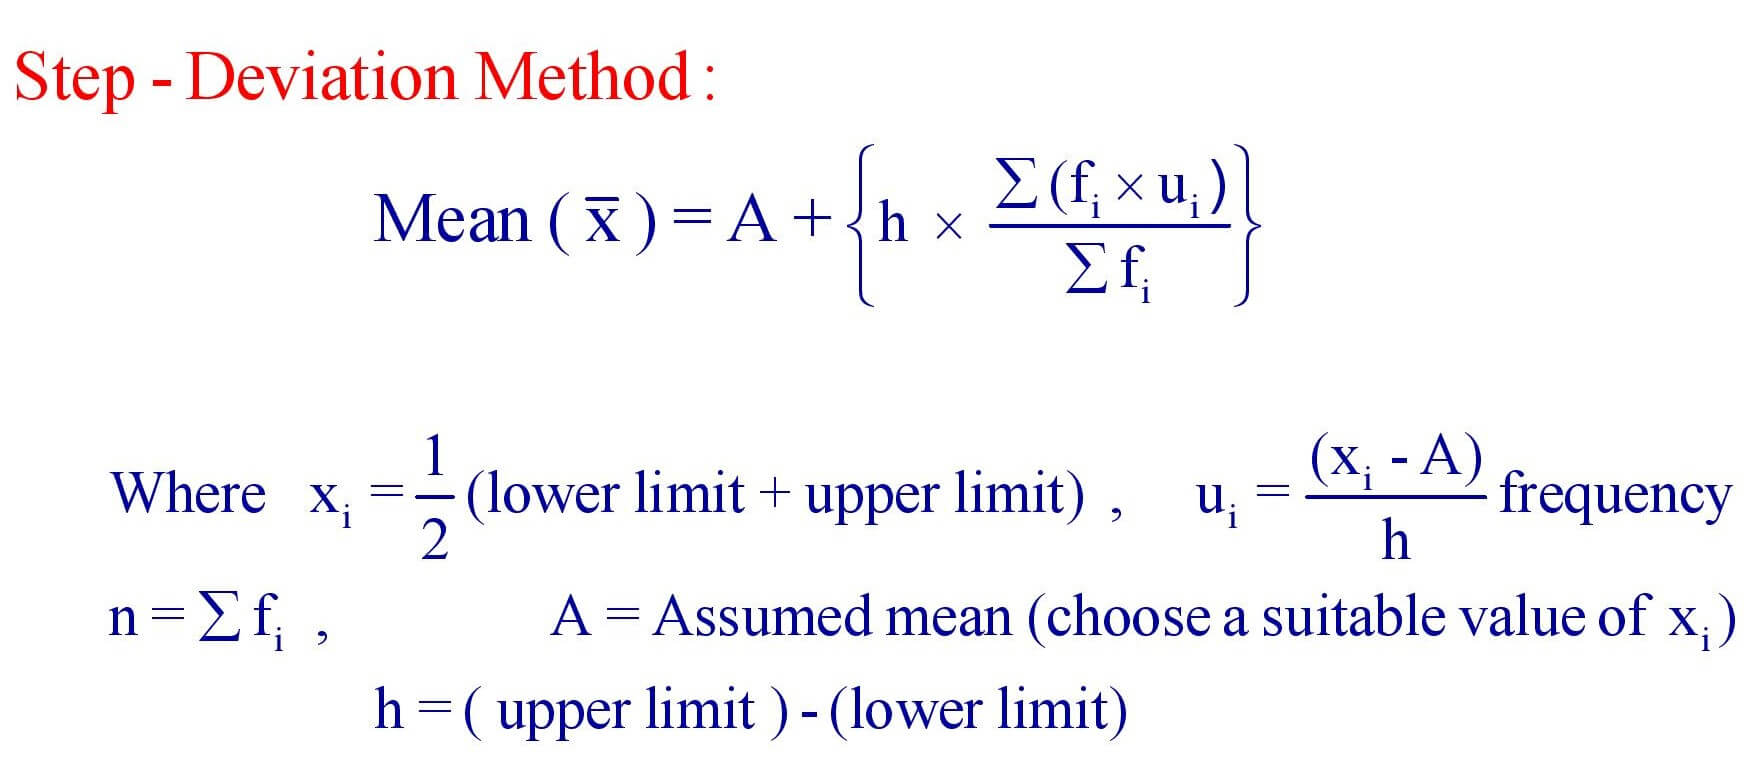 Step - Deviation Method Formula